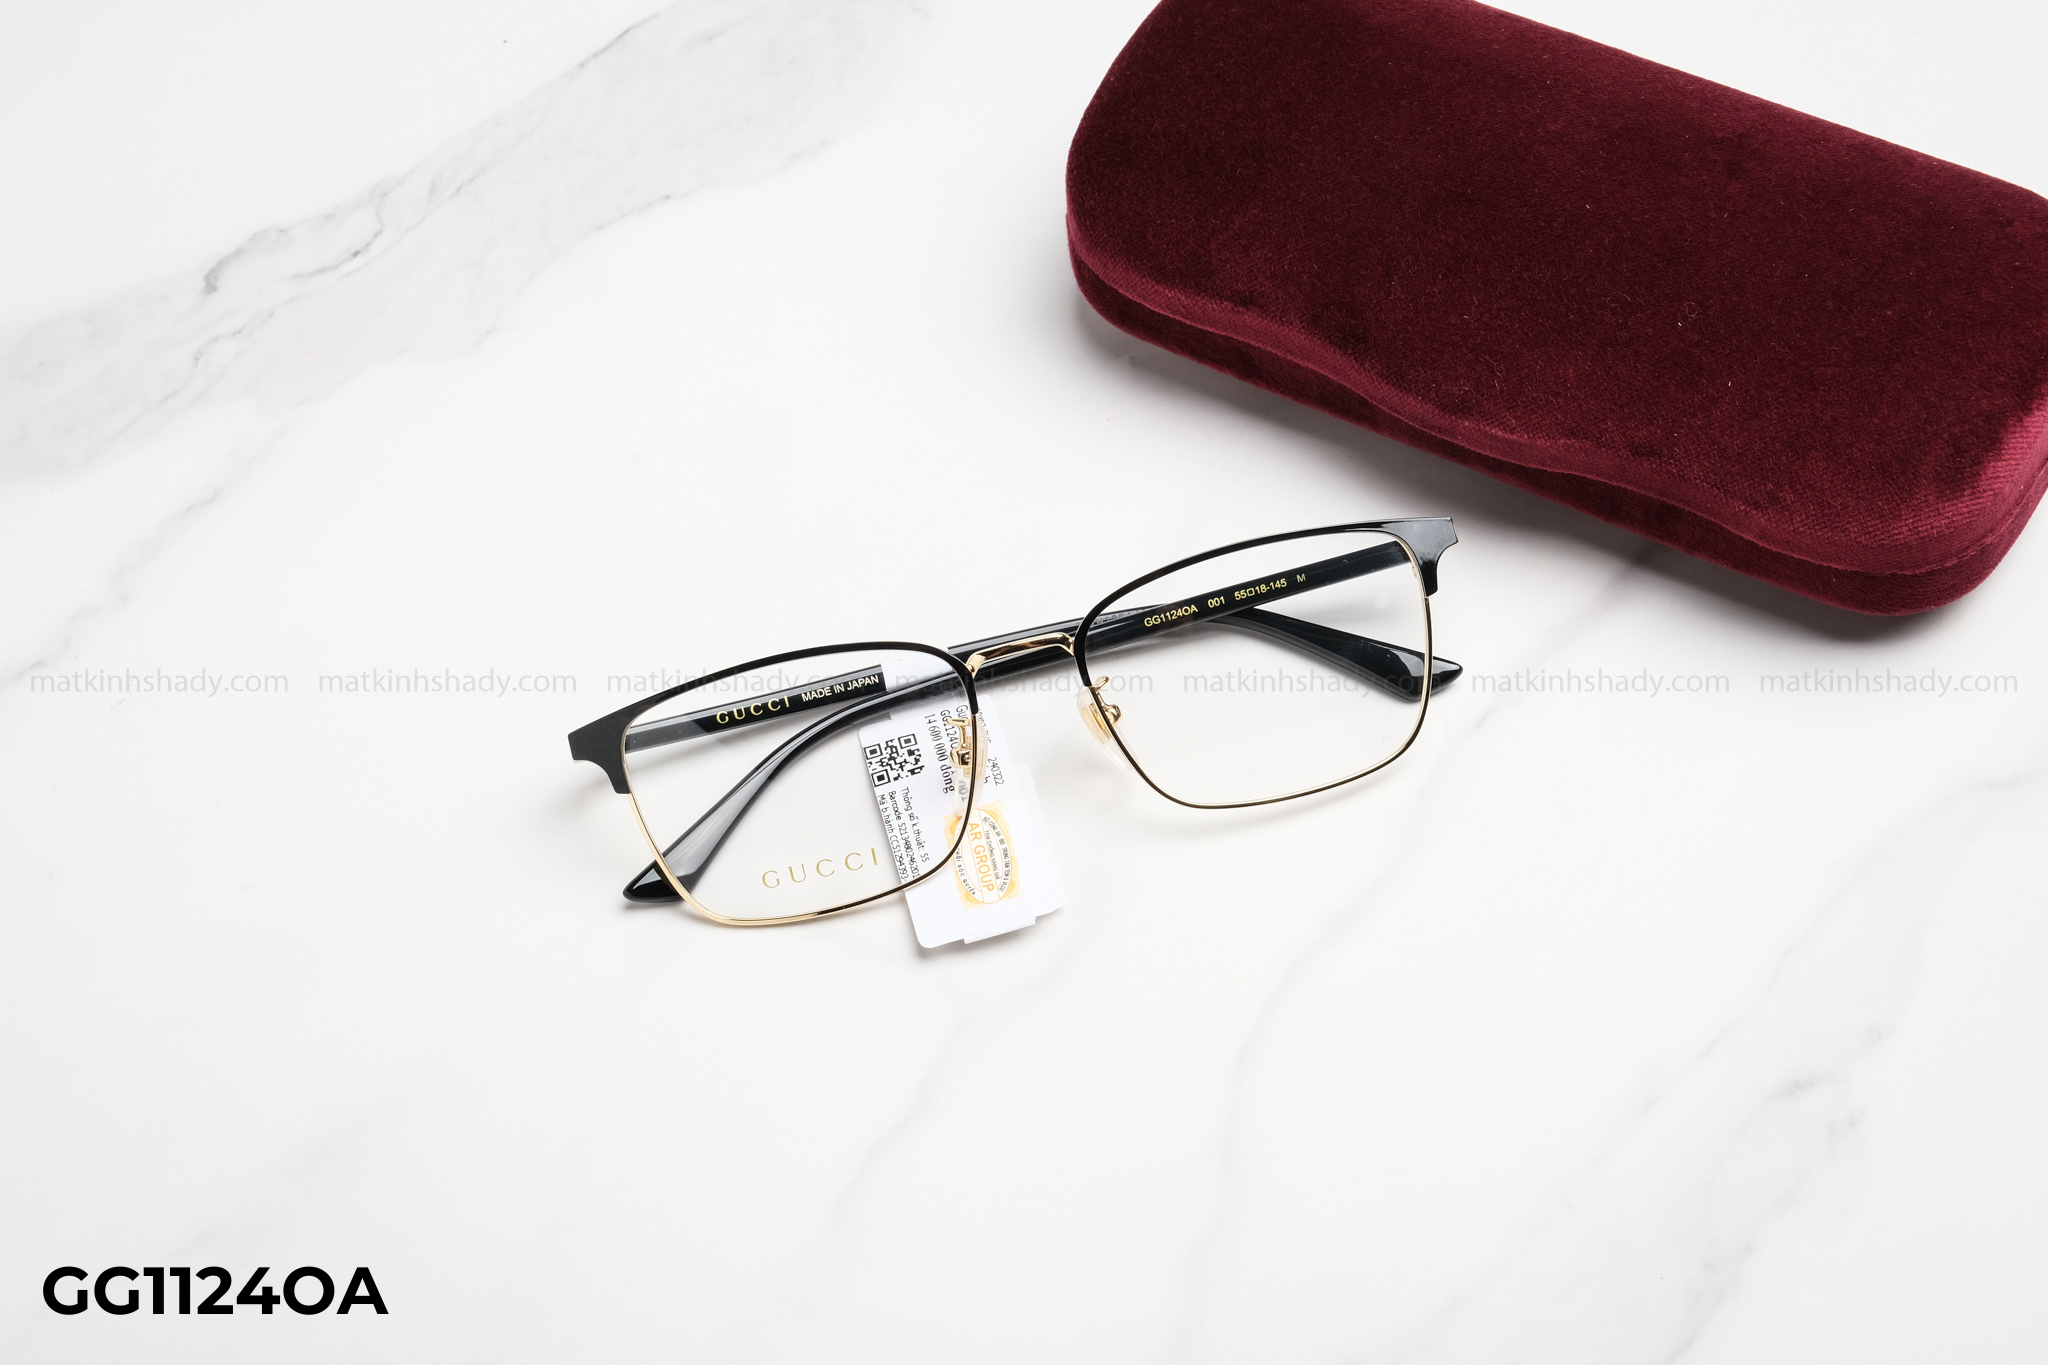  Gucci Eyewear - Glasses - GG1124OA 